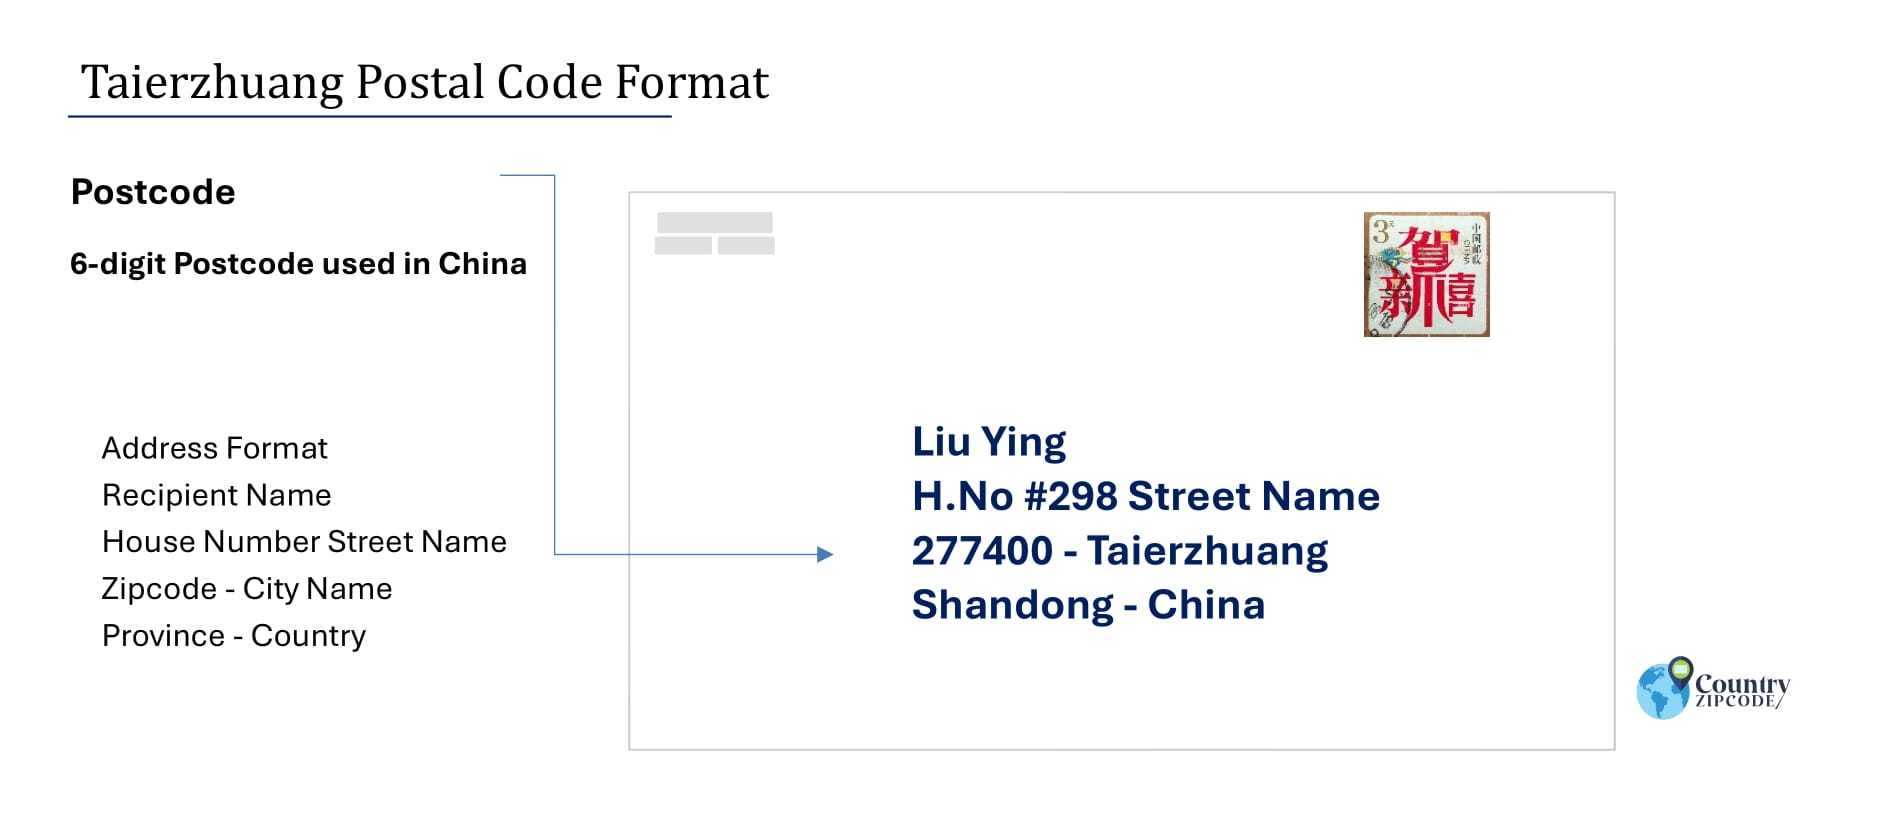 Example of TaierzhuangChinaPostalcodeandAddressformat